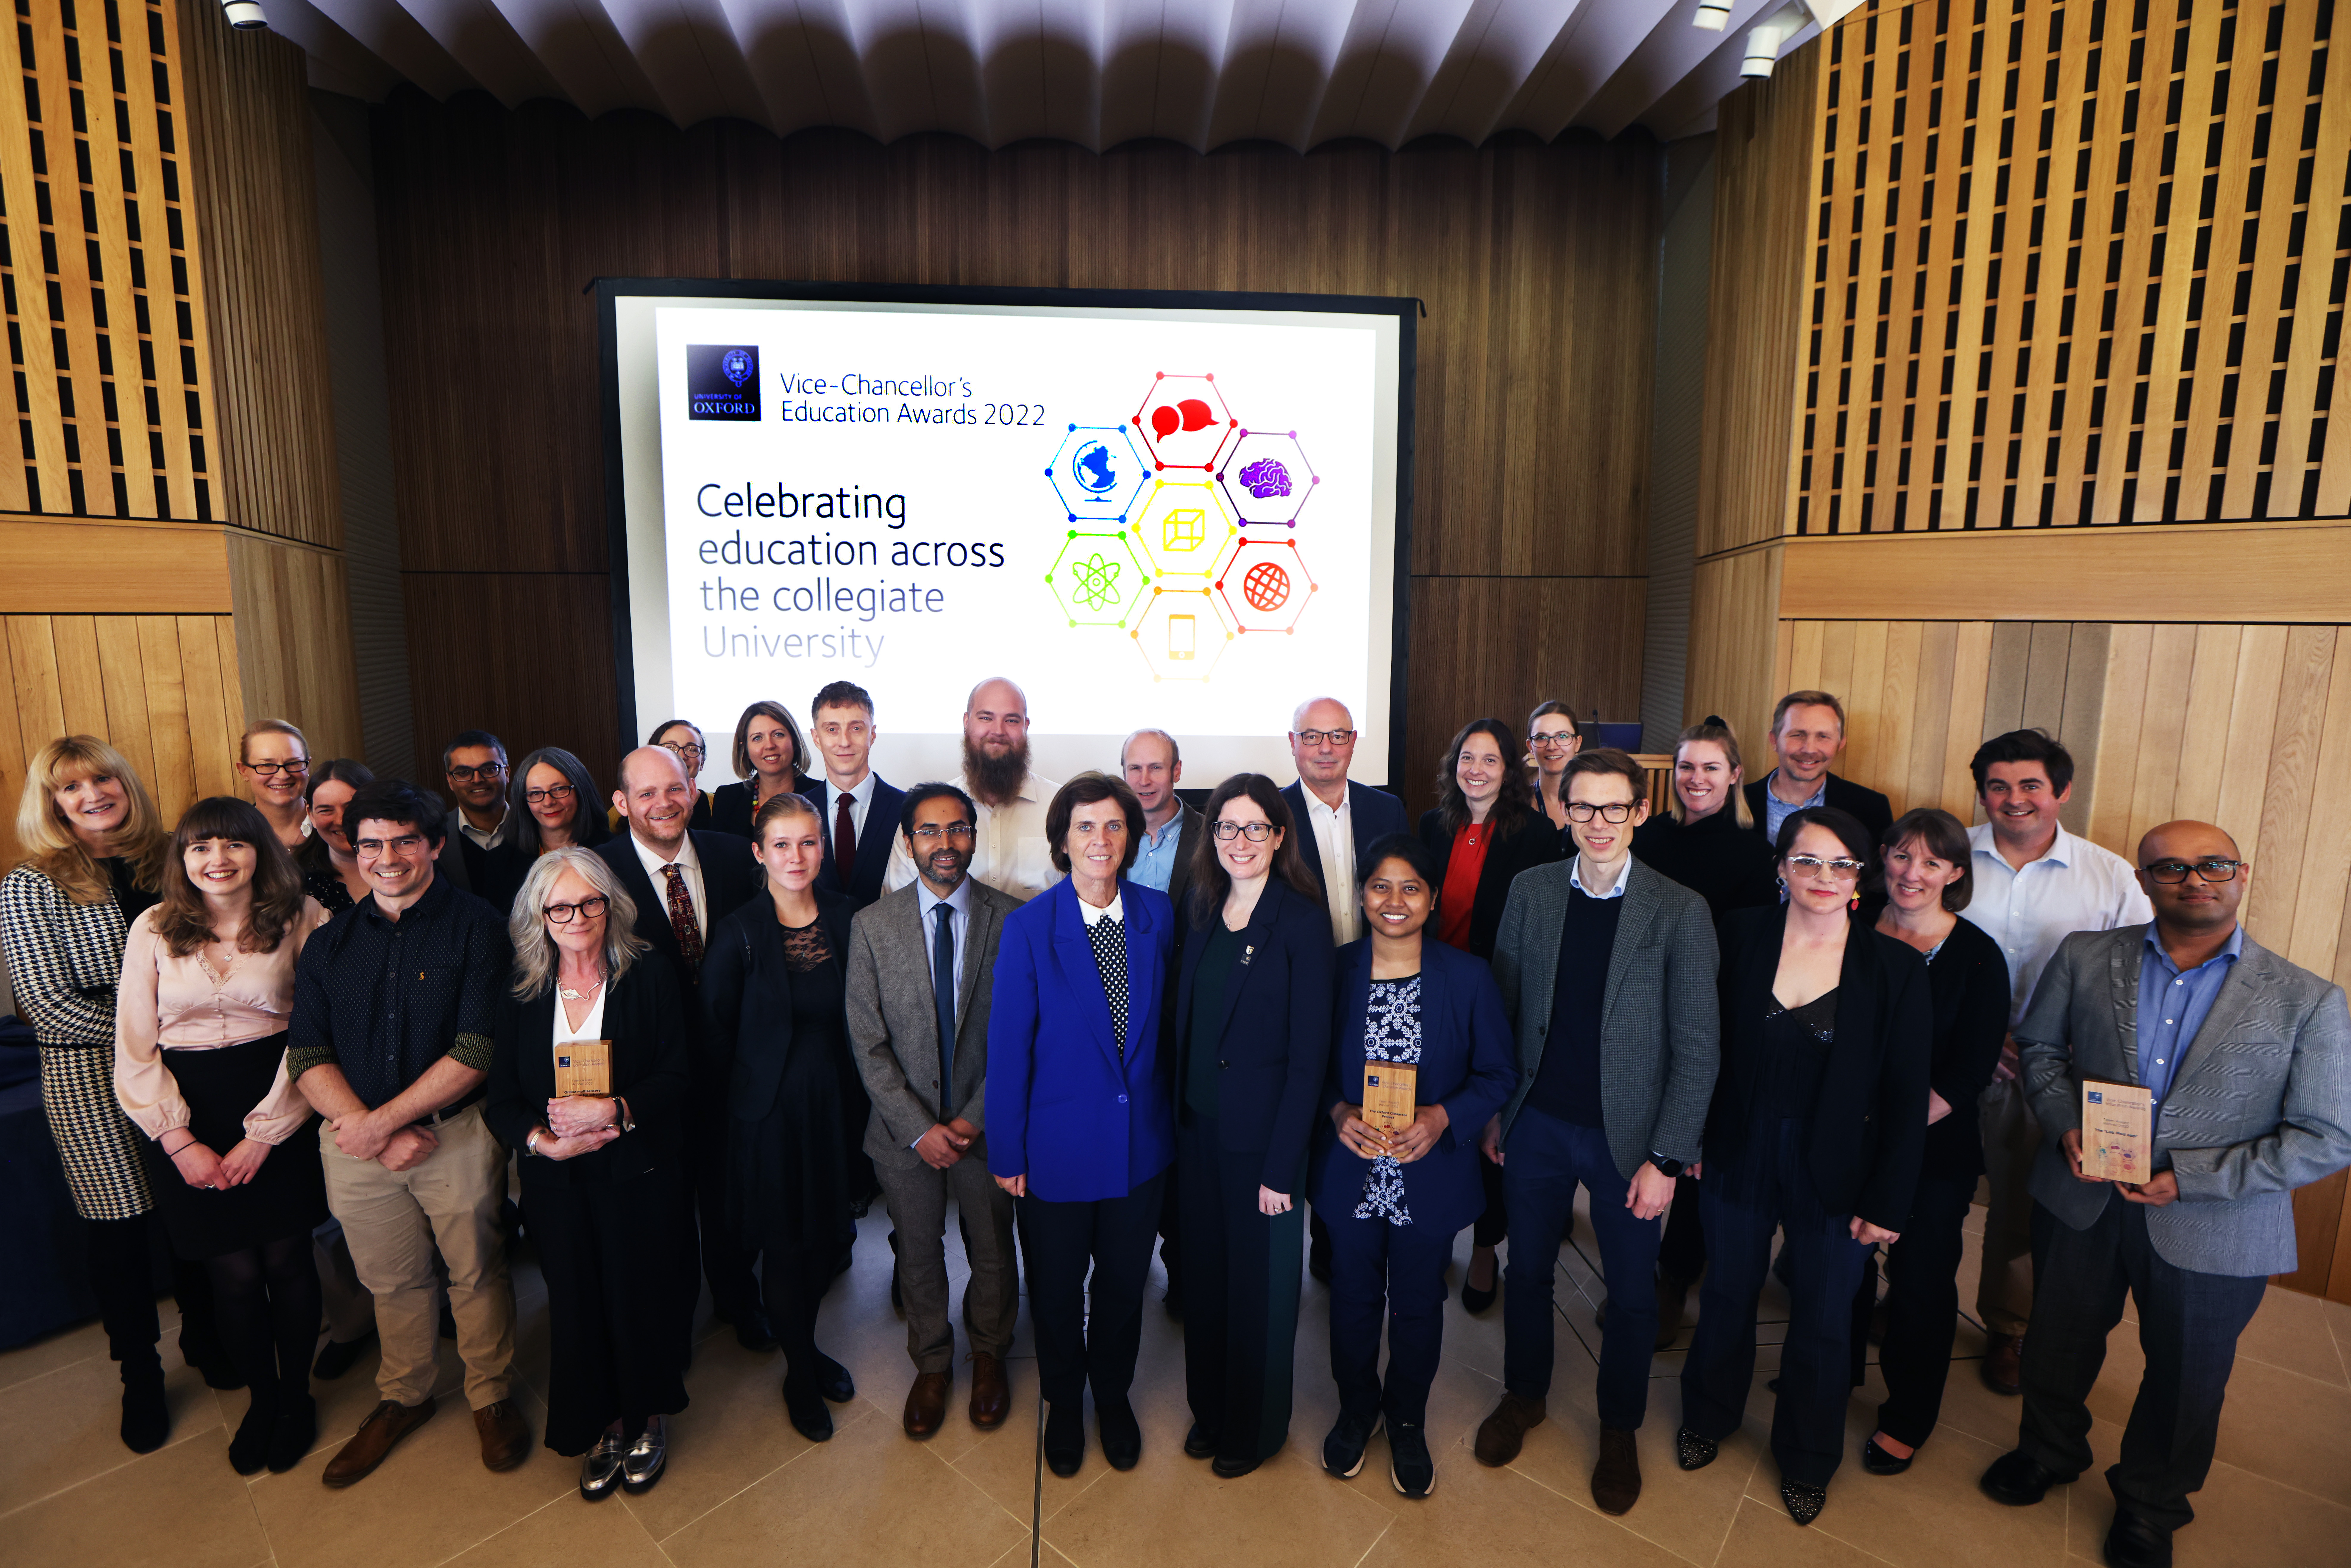 Participants at the Vice Chancellor's Education Awards 2022